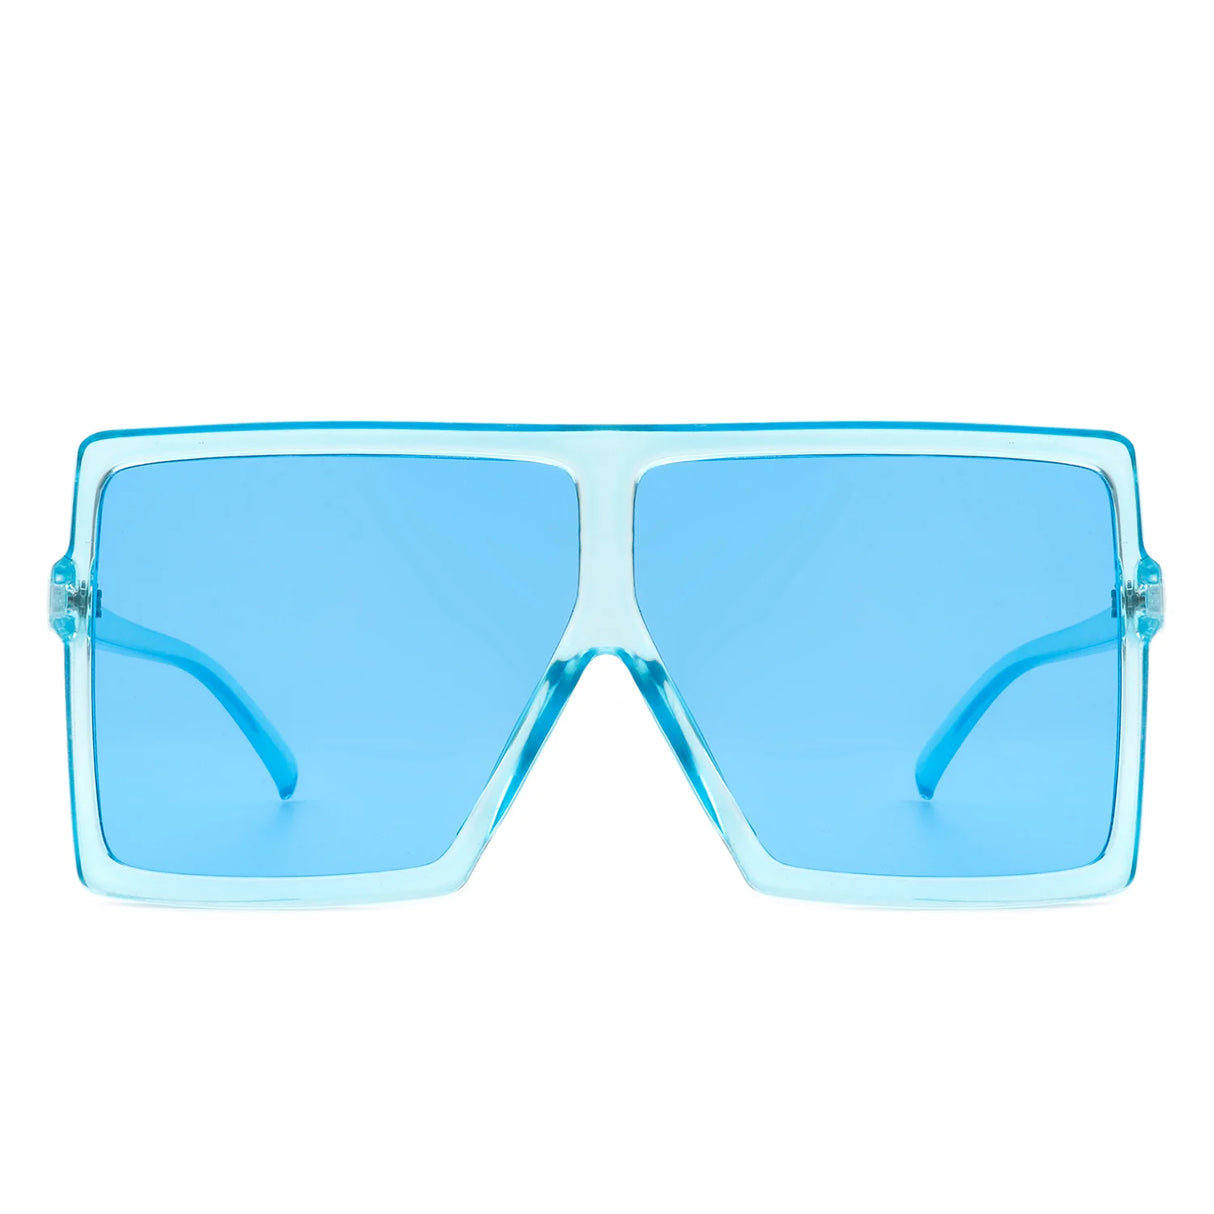 Nicki Summer Sunglasses